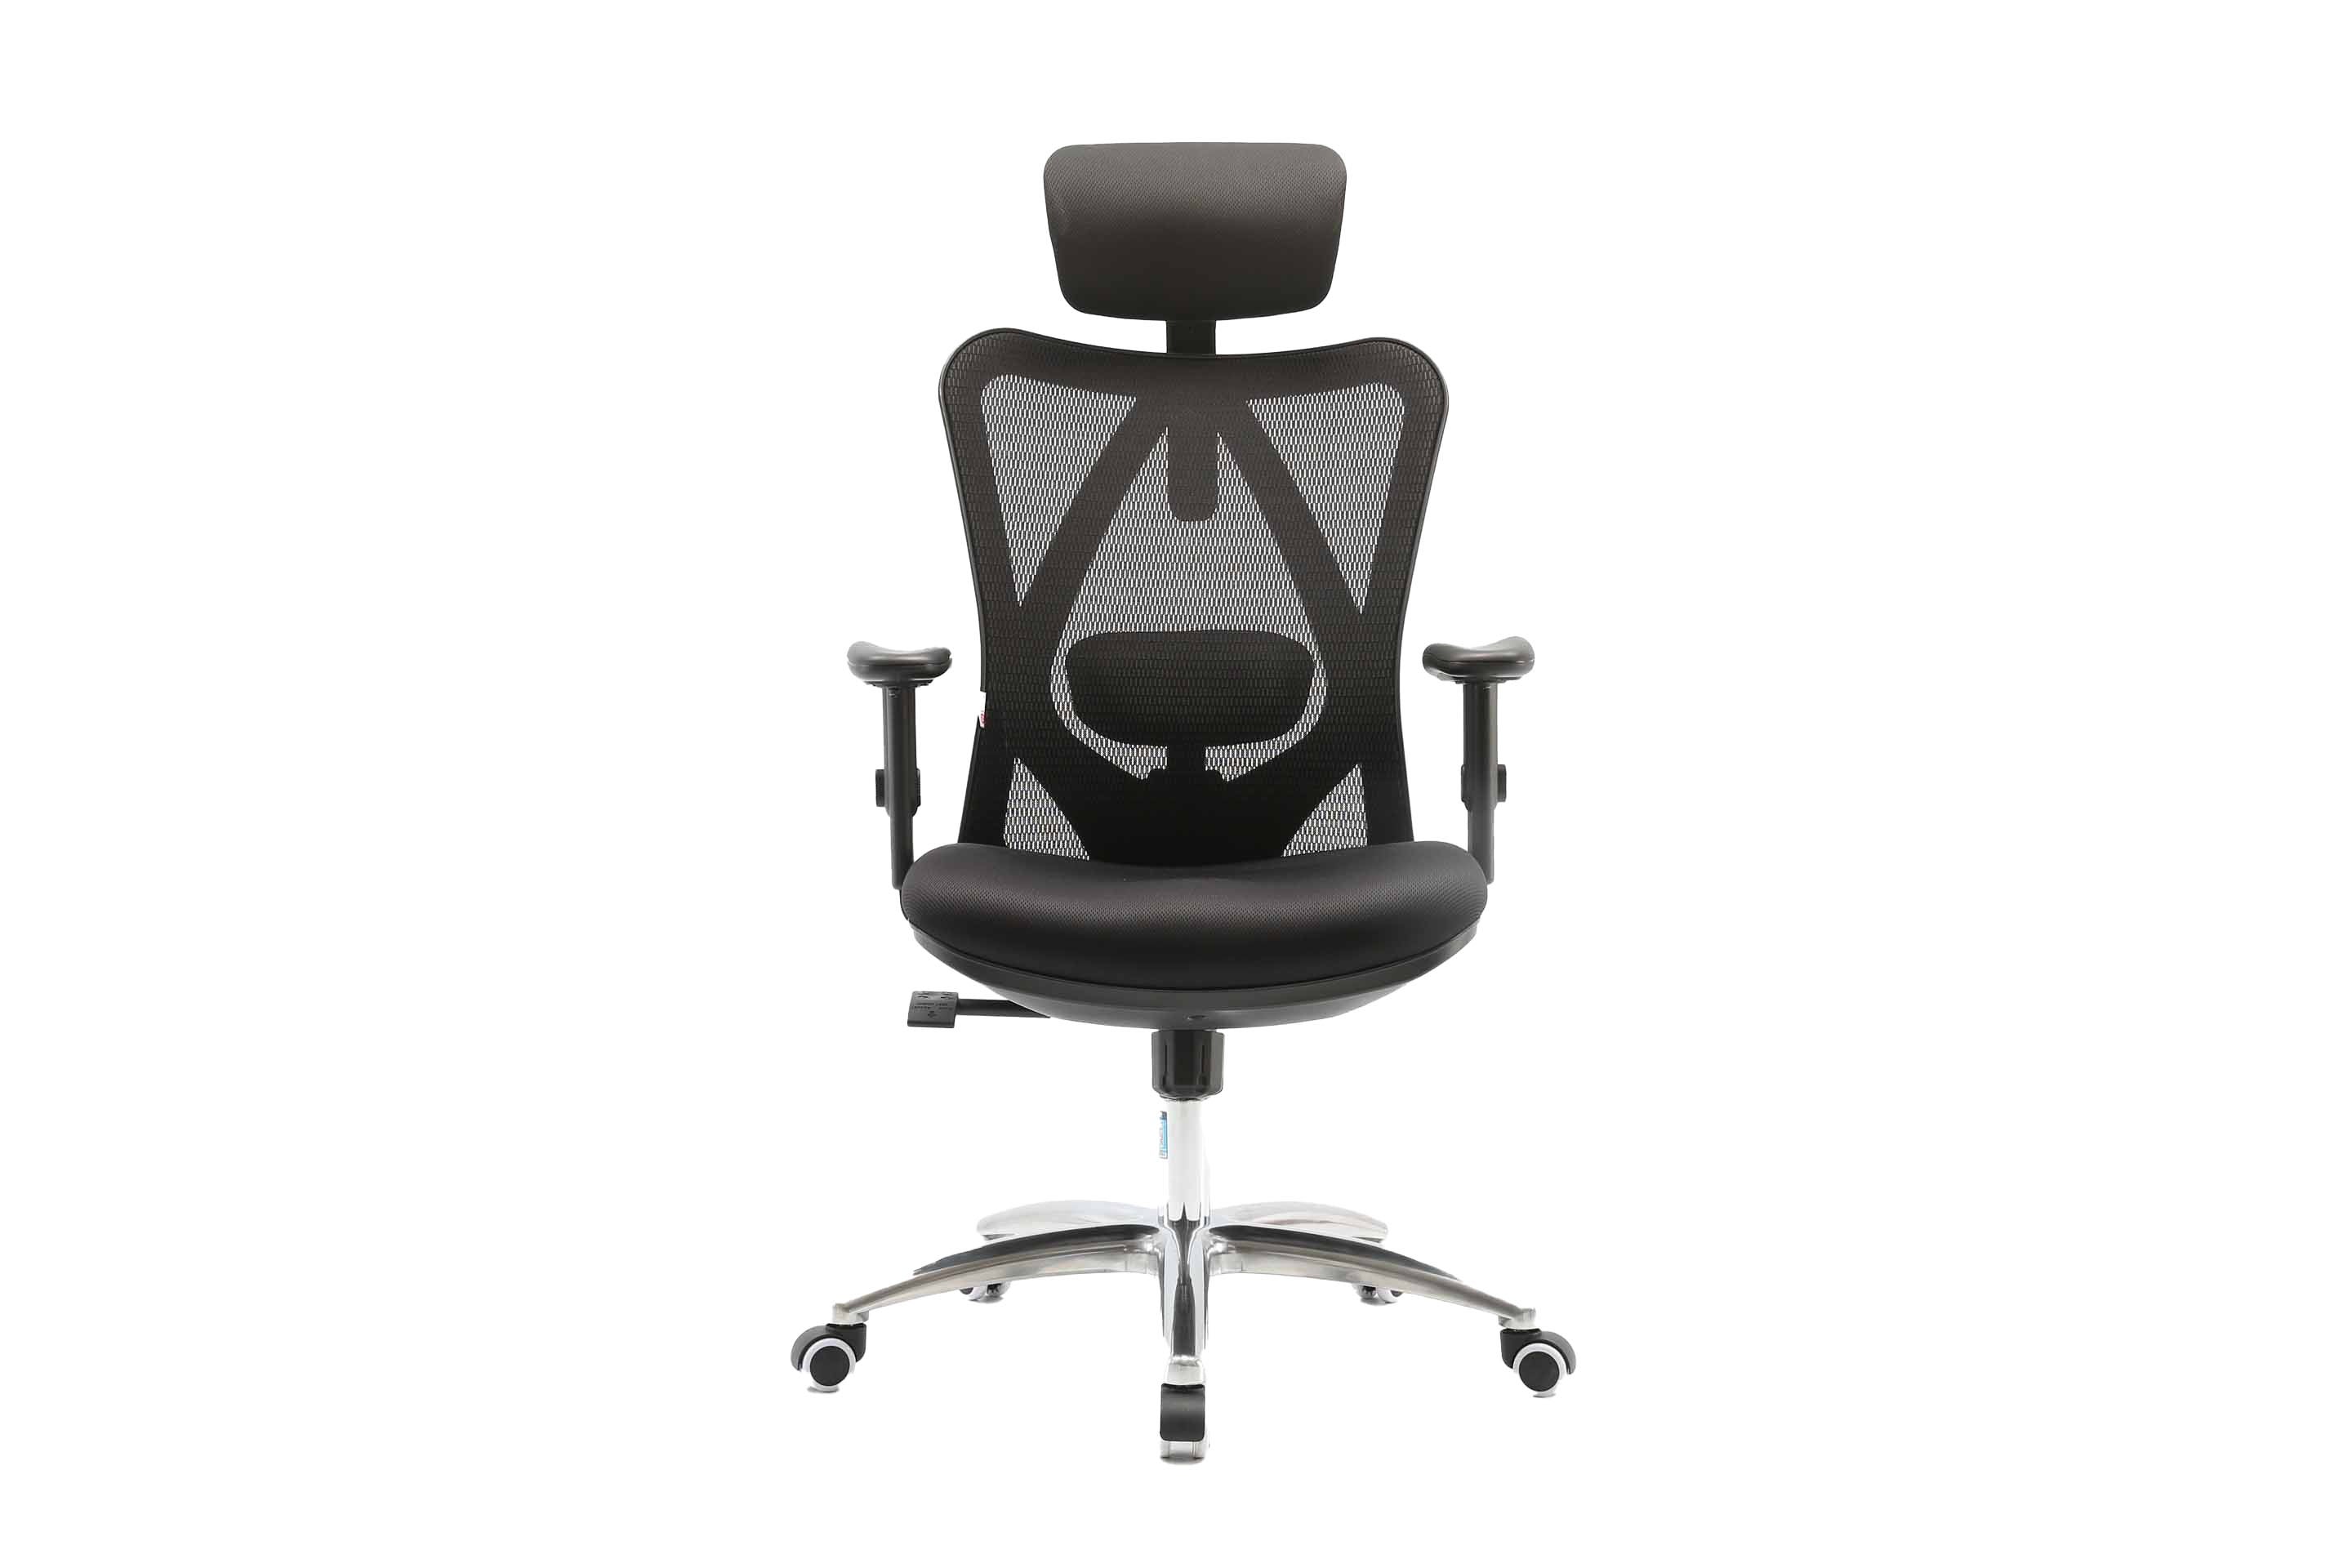 SIHOO M18 Ergonomics Task Office Chair